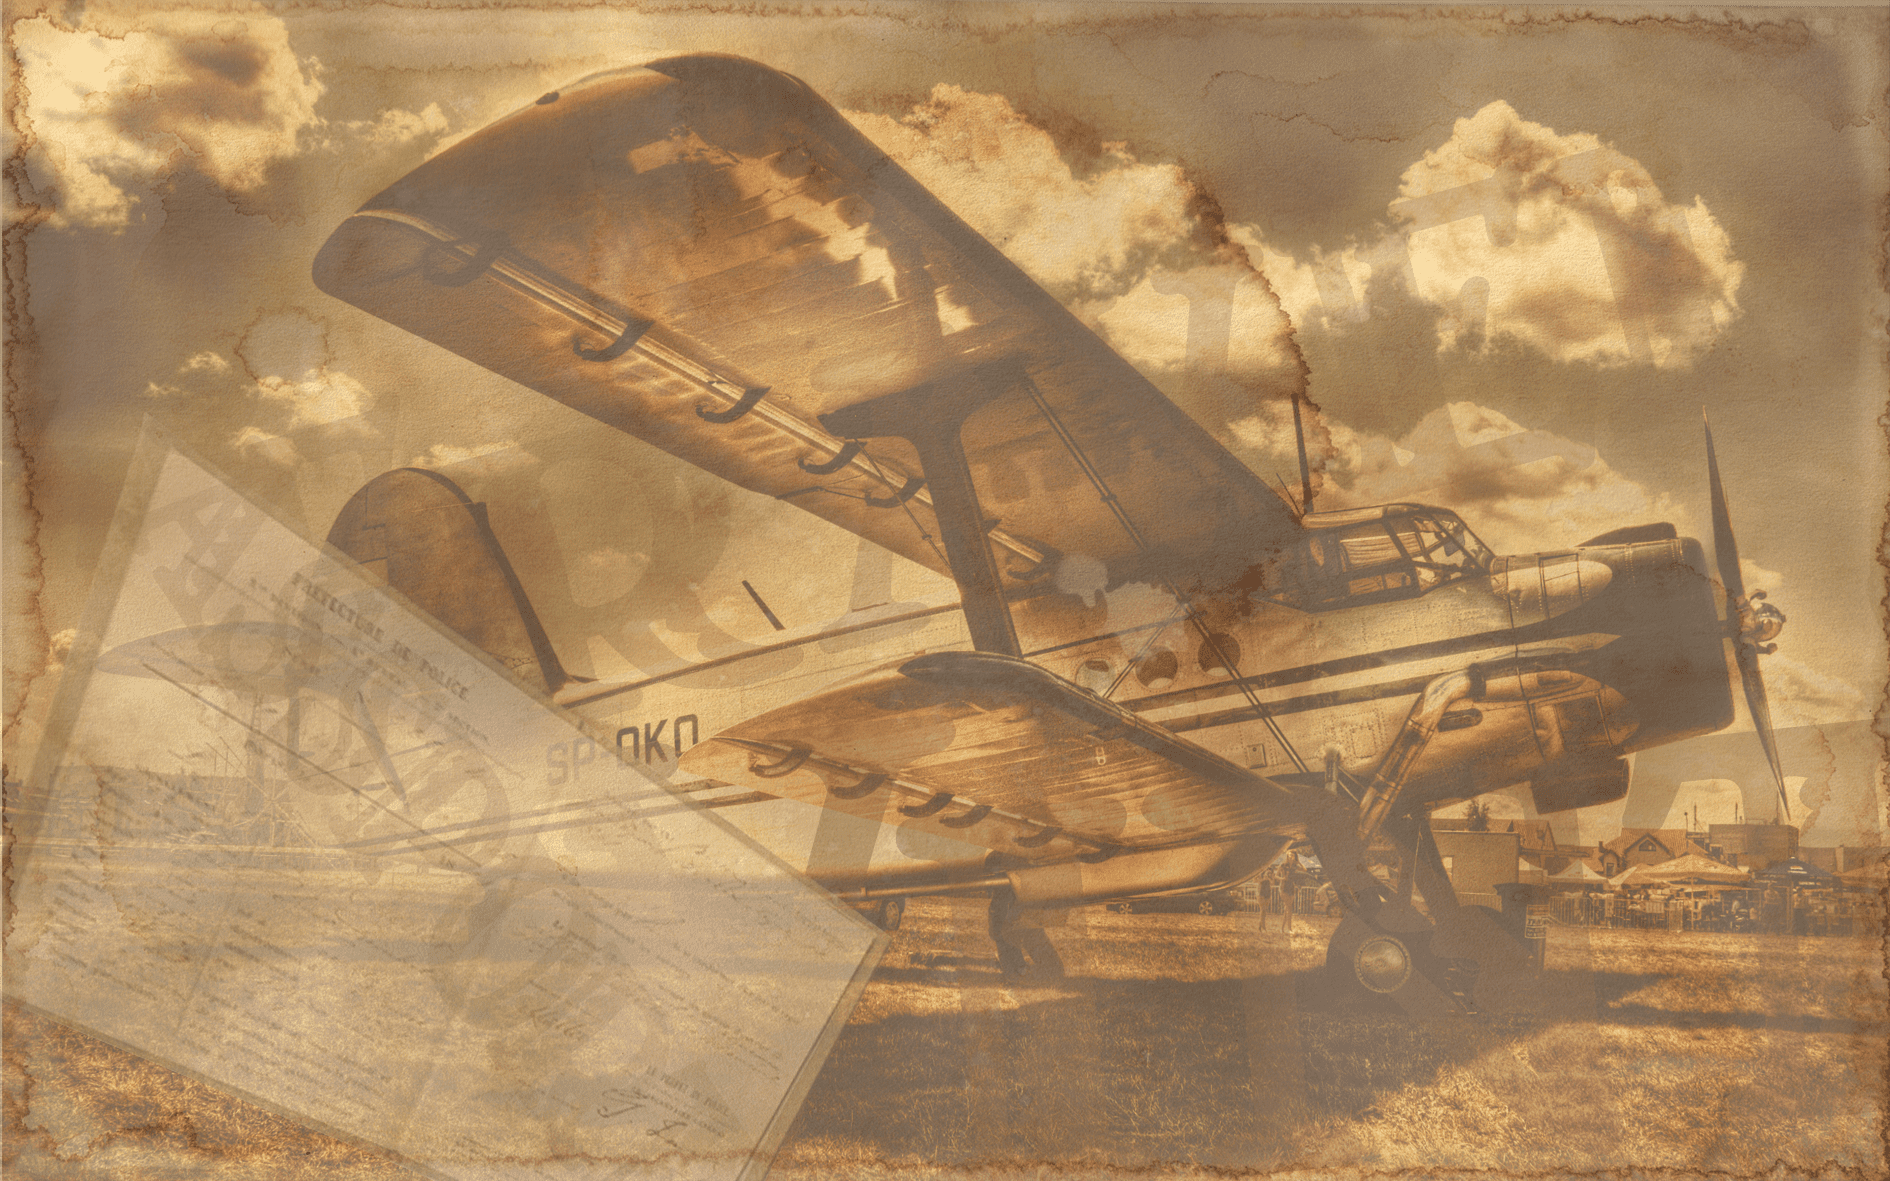 Vintage_Aircraft_Postcard_by_rah87